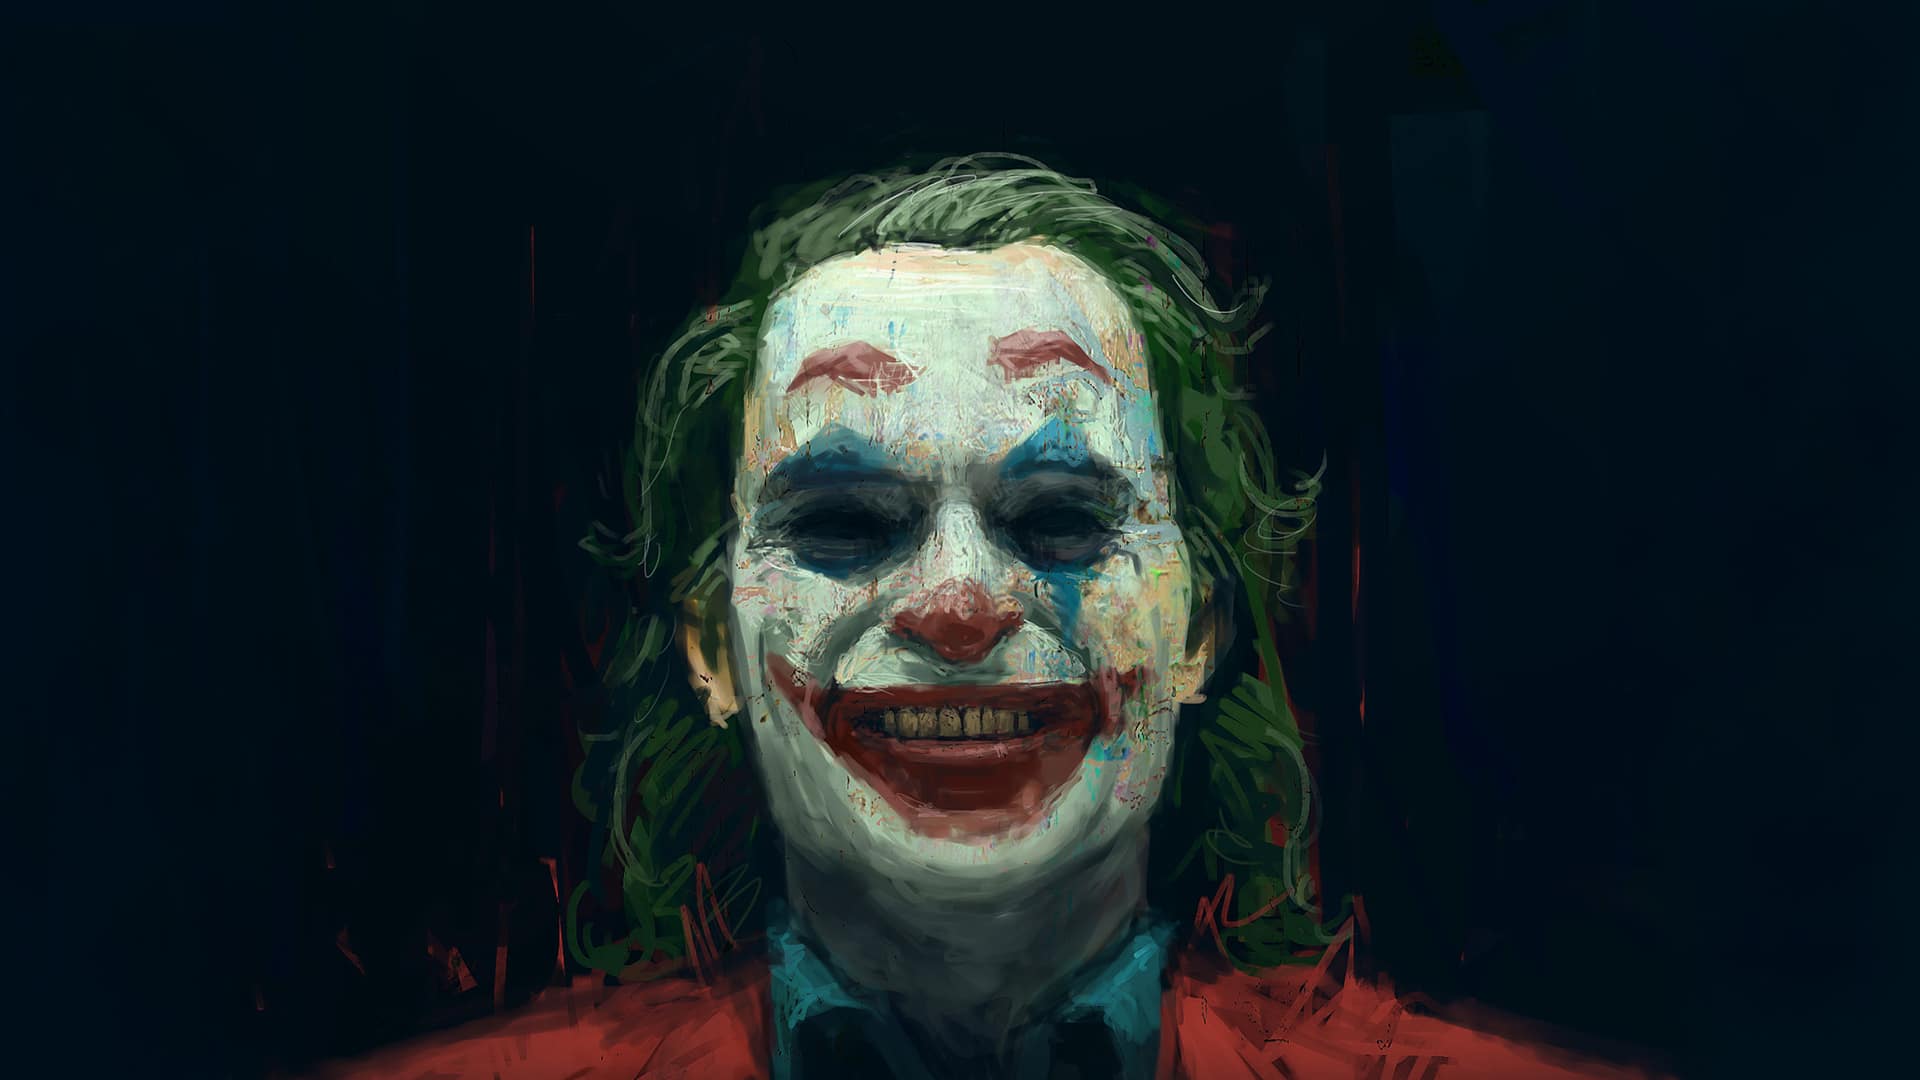 Joker Movie Review Joaquin Phoenix 2019 DC